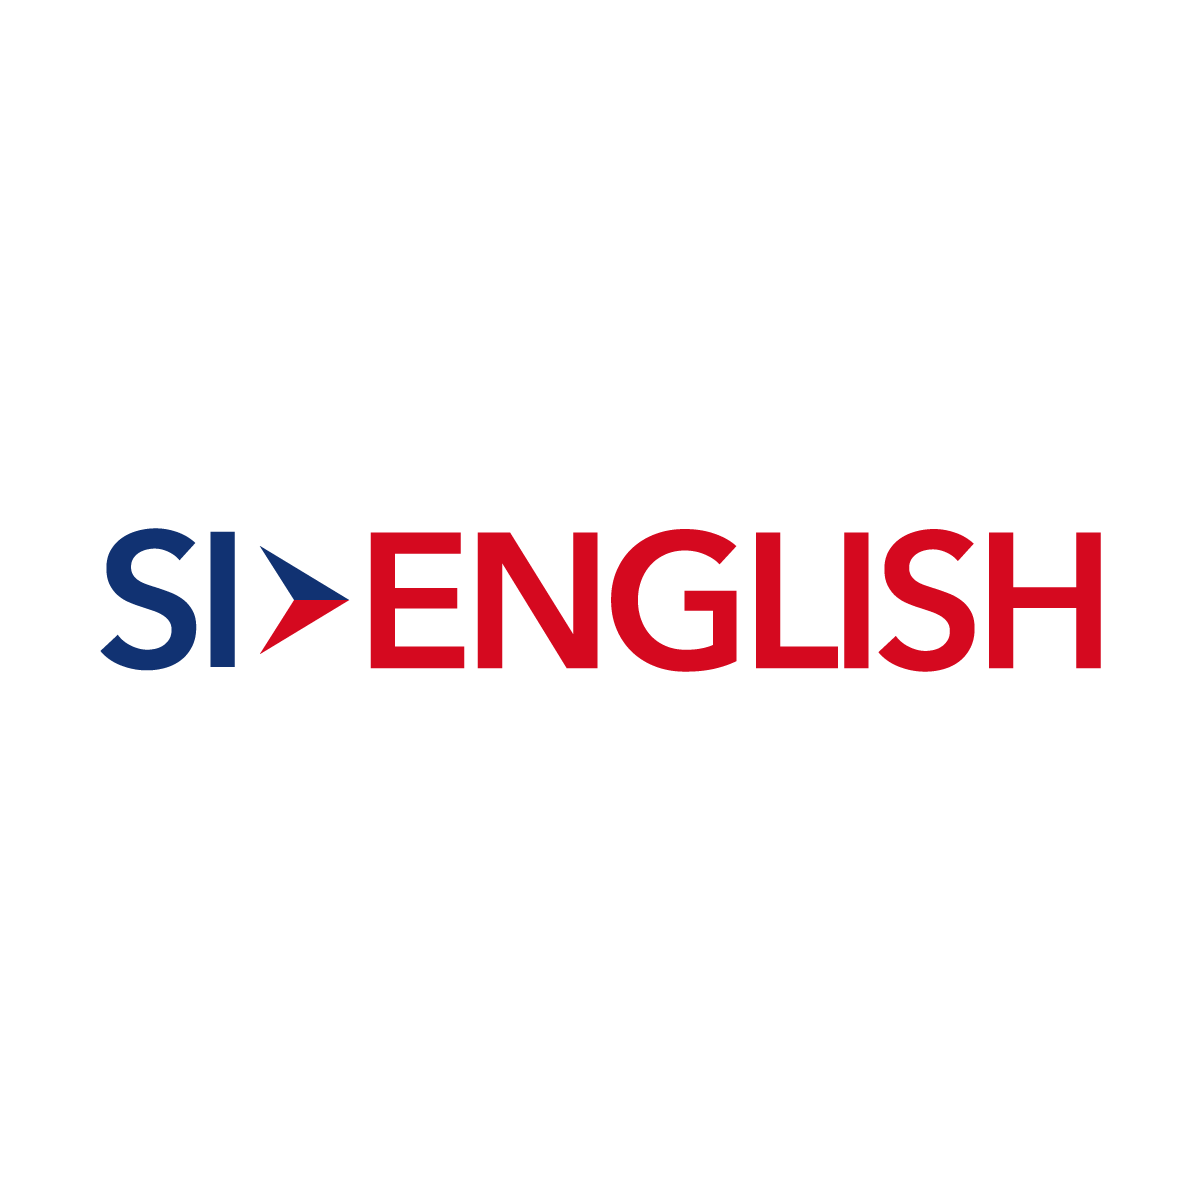 (c) Si-english.com